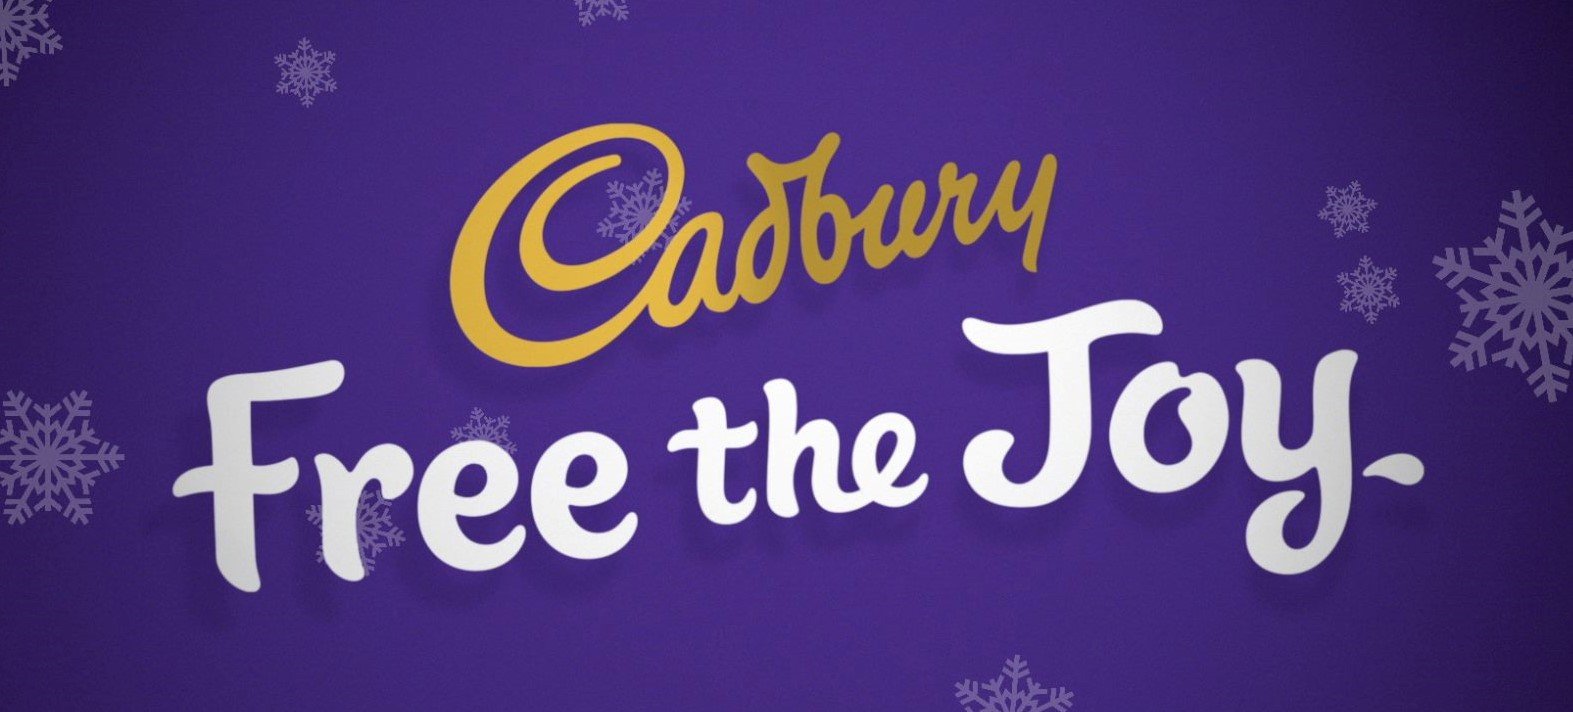 Marketing strategy of Cadbury